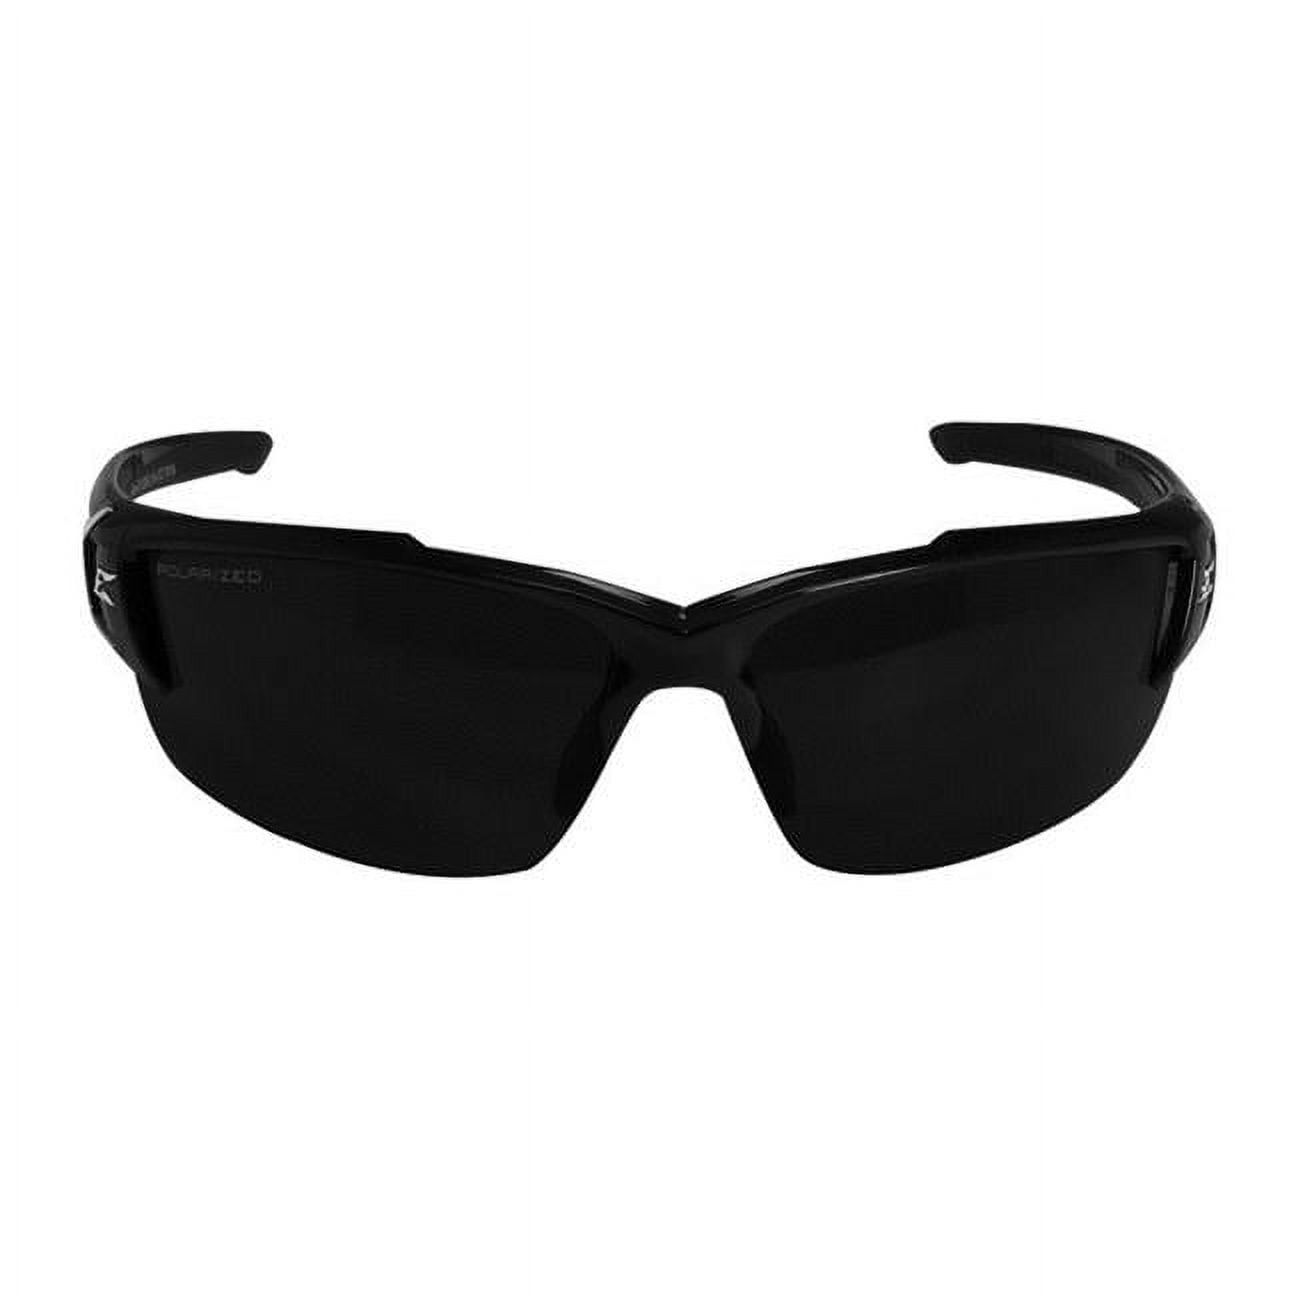 Edge Eyewear 2005838 Khor G2 Polarized Safety Glasses Smoke Lens Black Frame